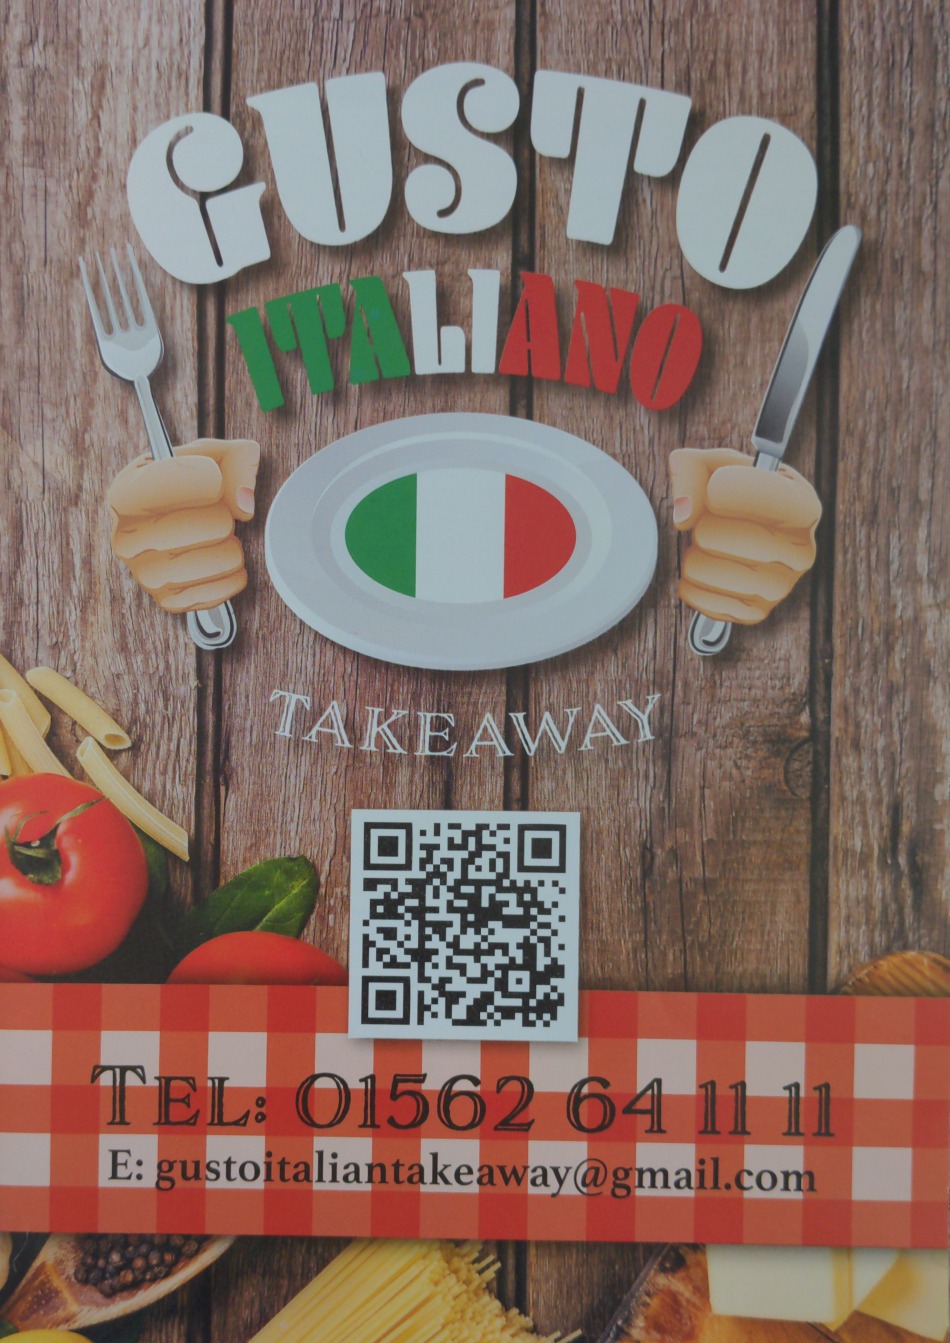 Takeaway Restaurant Menu Page - Gusto Italiano Takeaway - Kidderminster